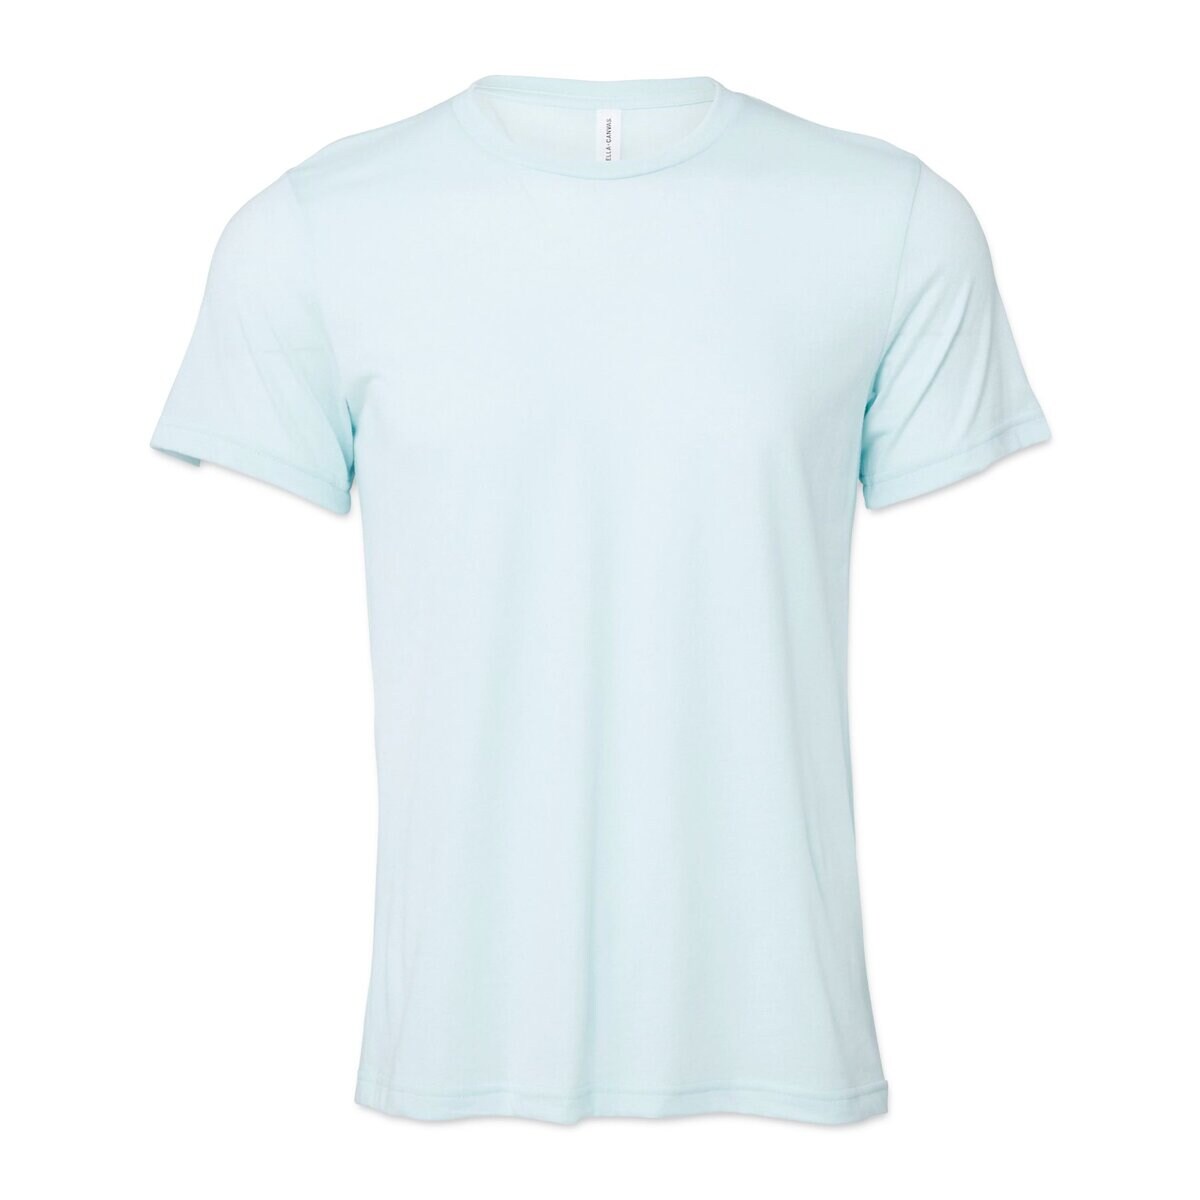 Bella Canvas Unisex T-shirt - Ice Blue Heather, Large